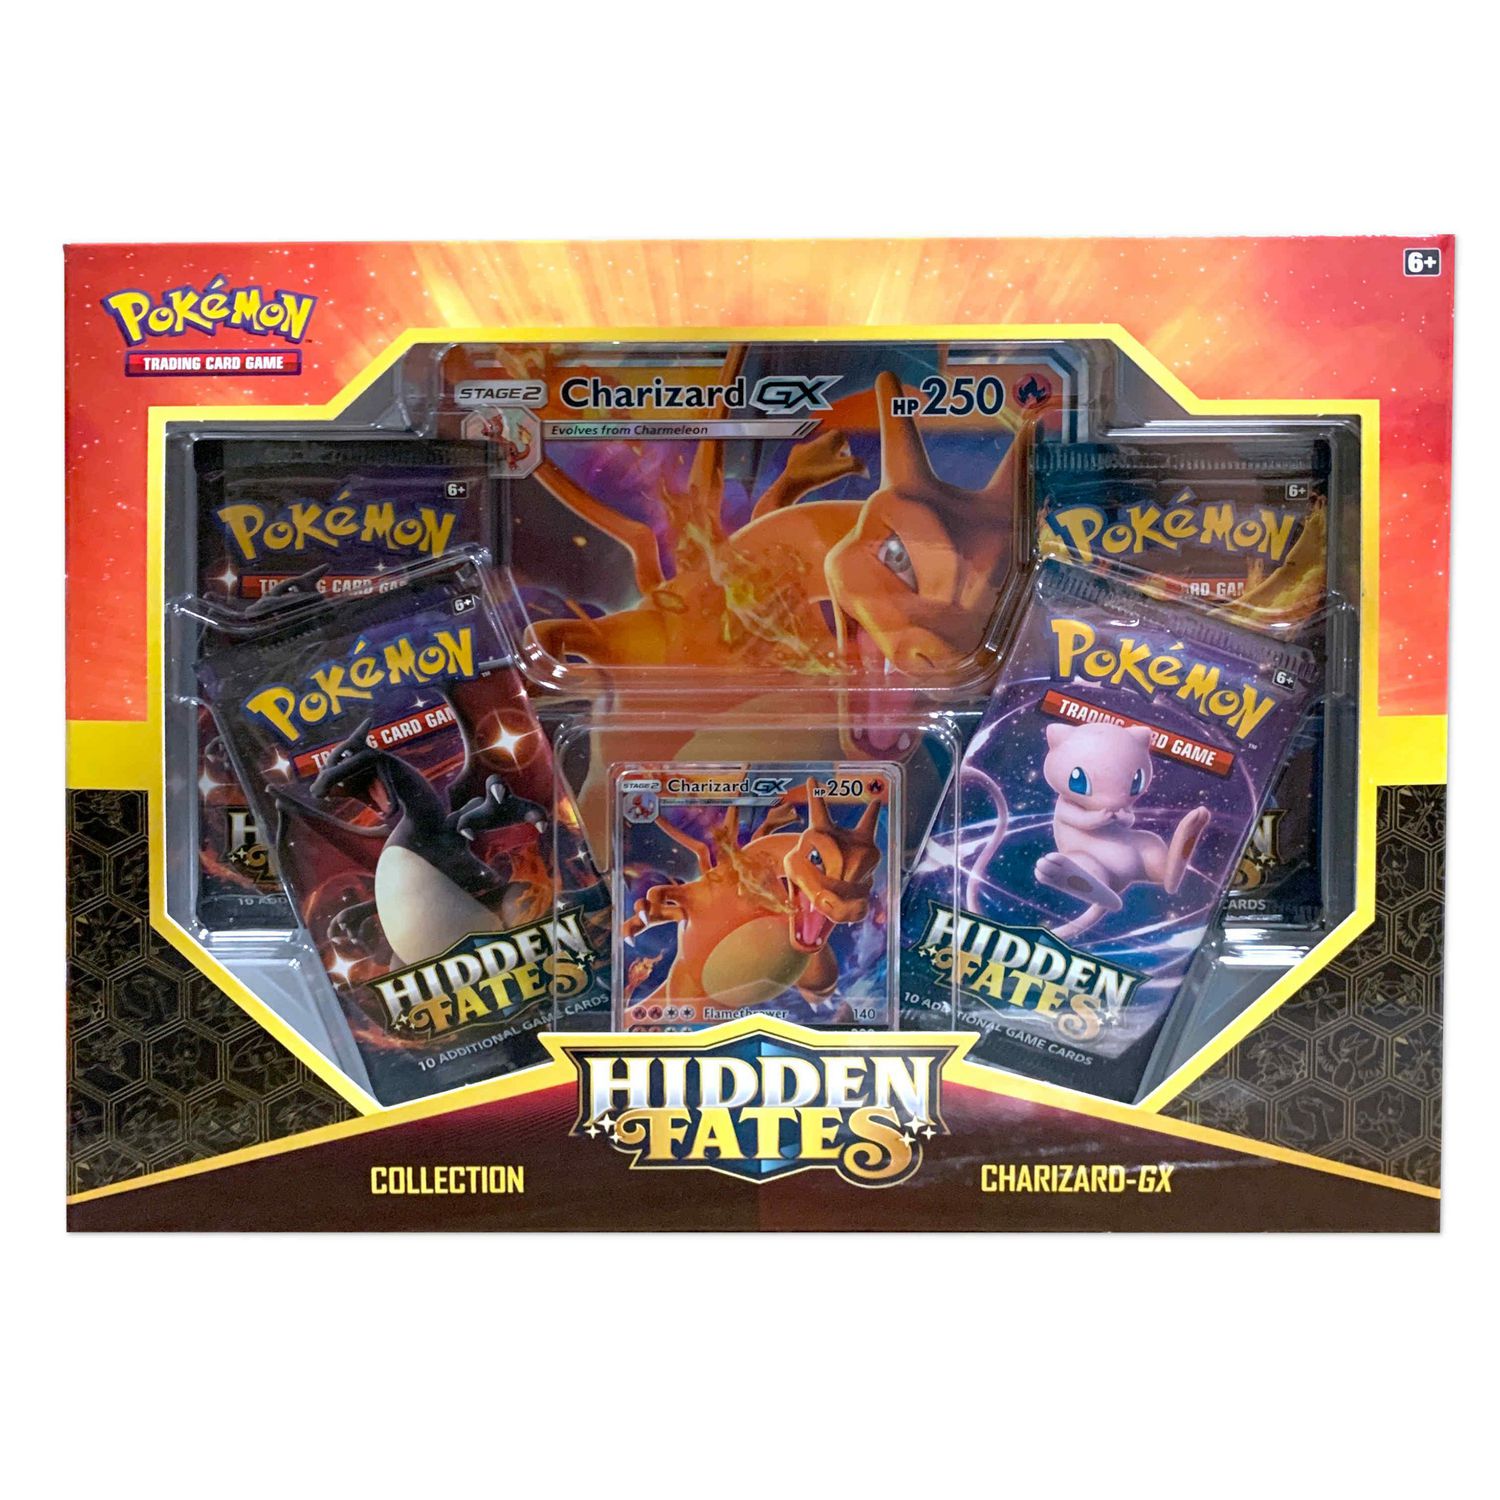 4 Sealed Packs! Pokémon TCG Hidden Fates Charizard GX Box 